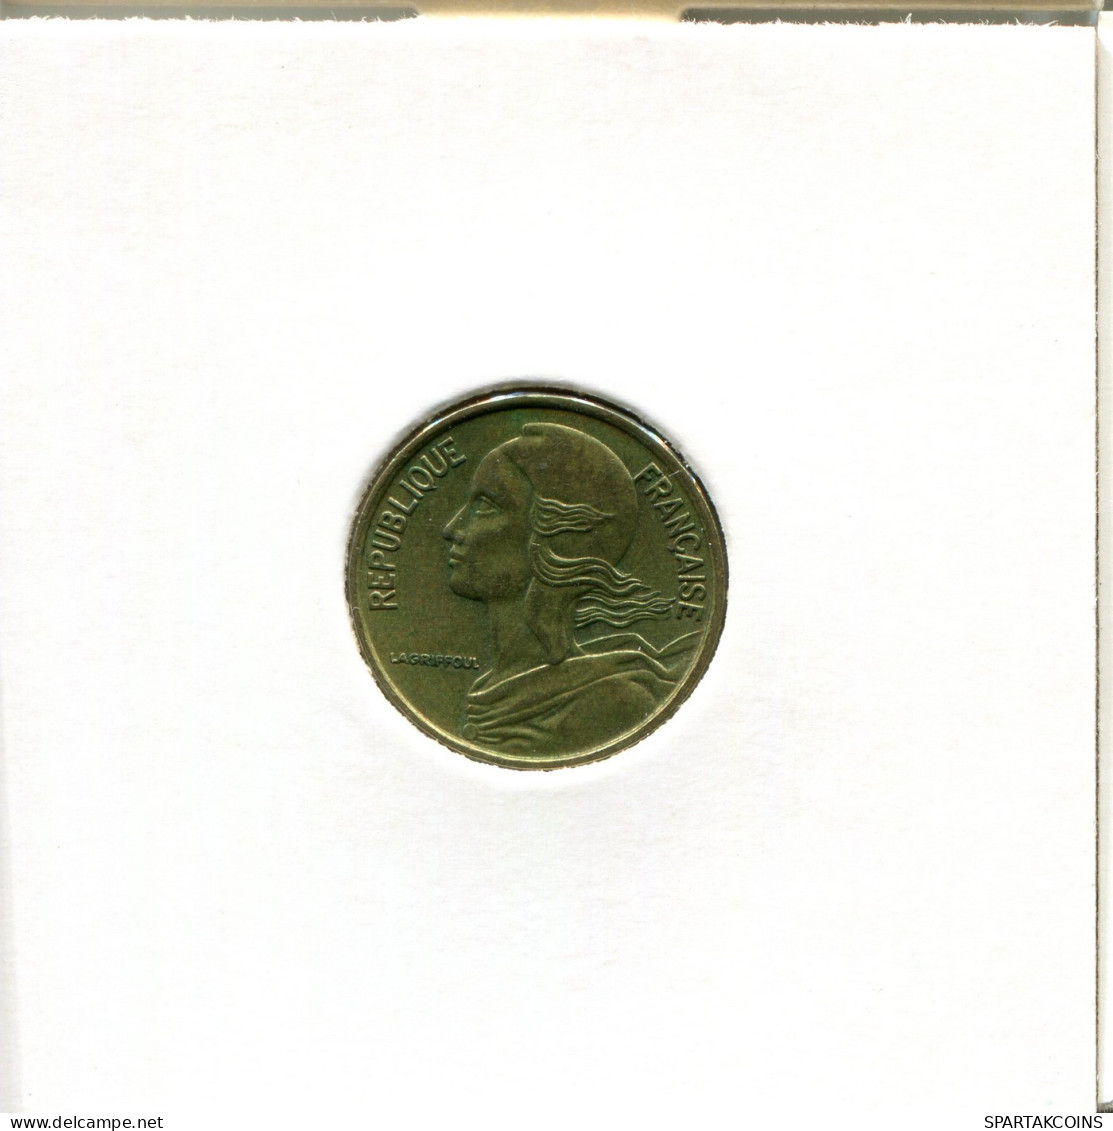 5 CENTIMES 1971 FRANCE Coin #AX058.U.A - 5 Centimes